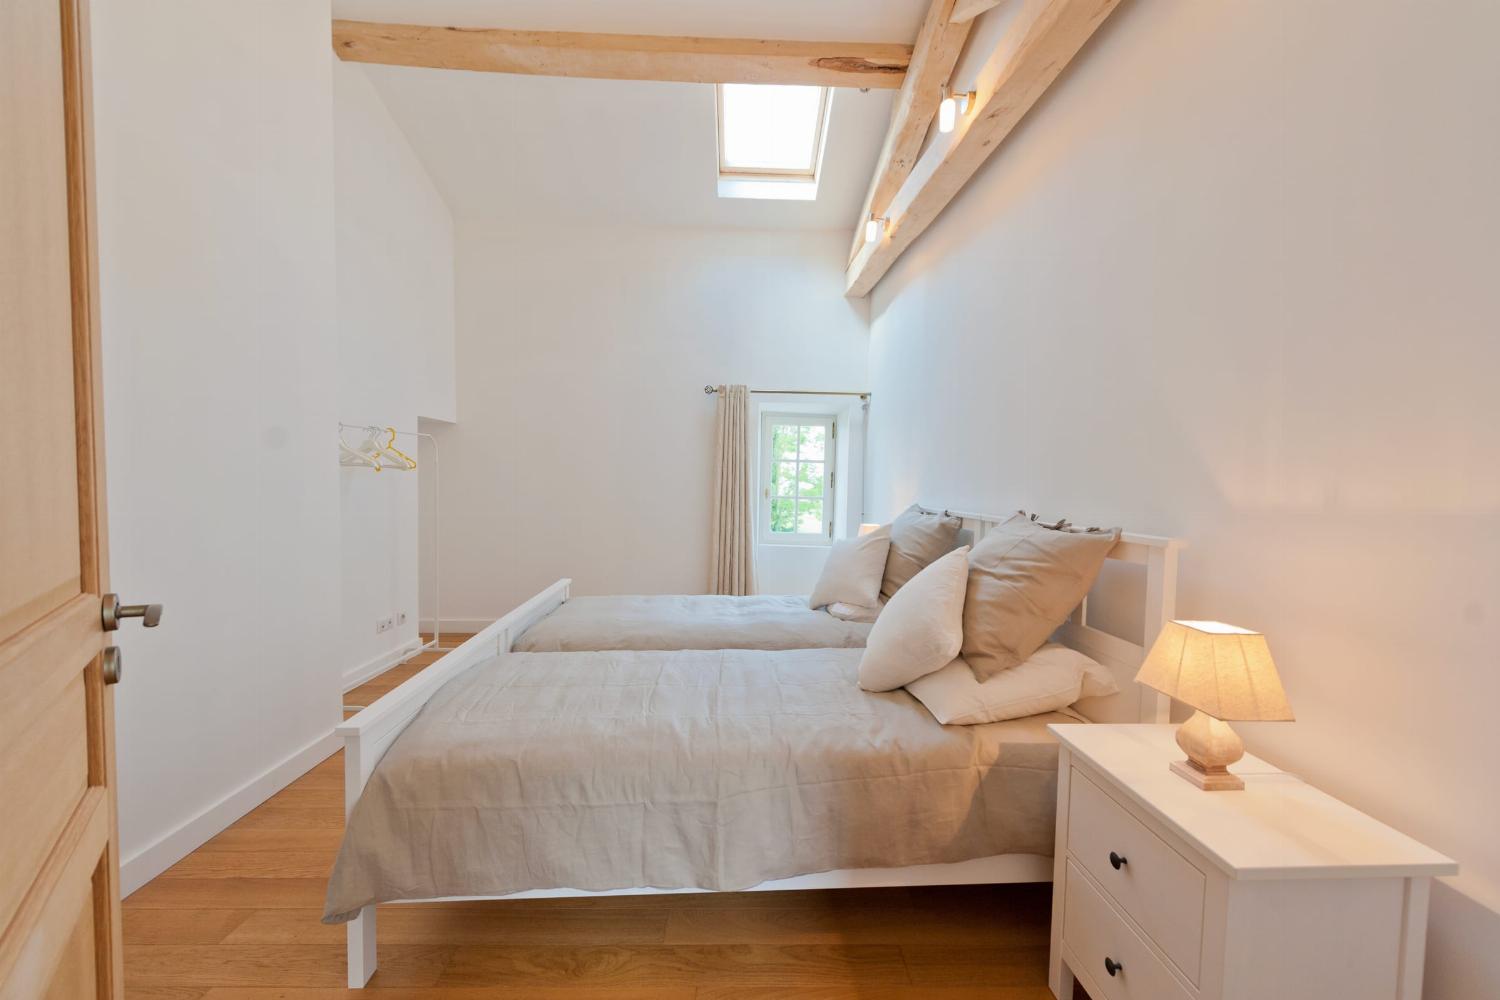 Bedroom | Rental home in the Tarn